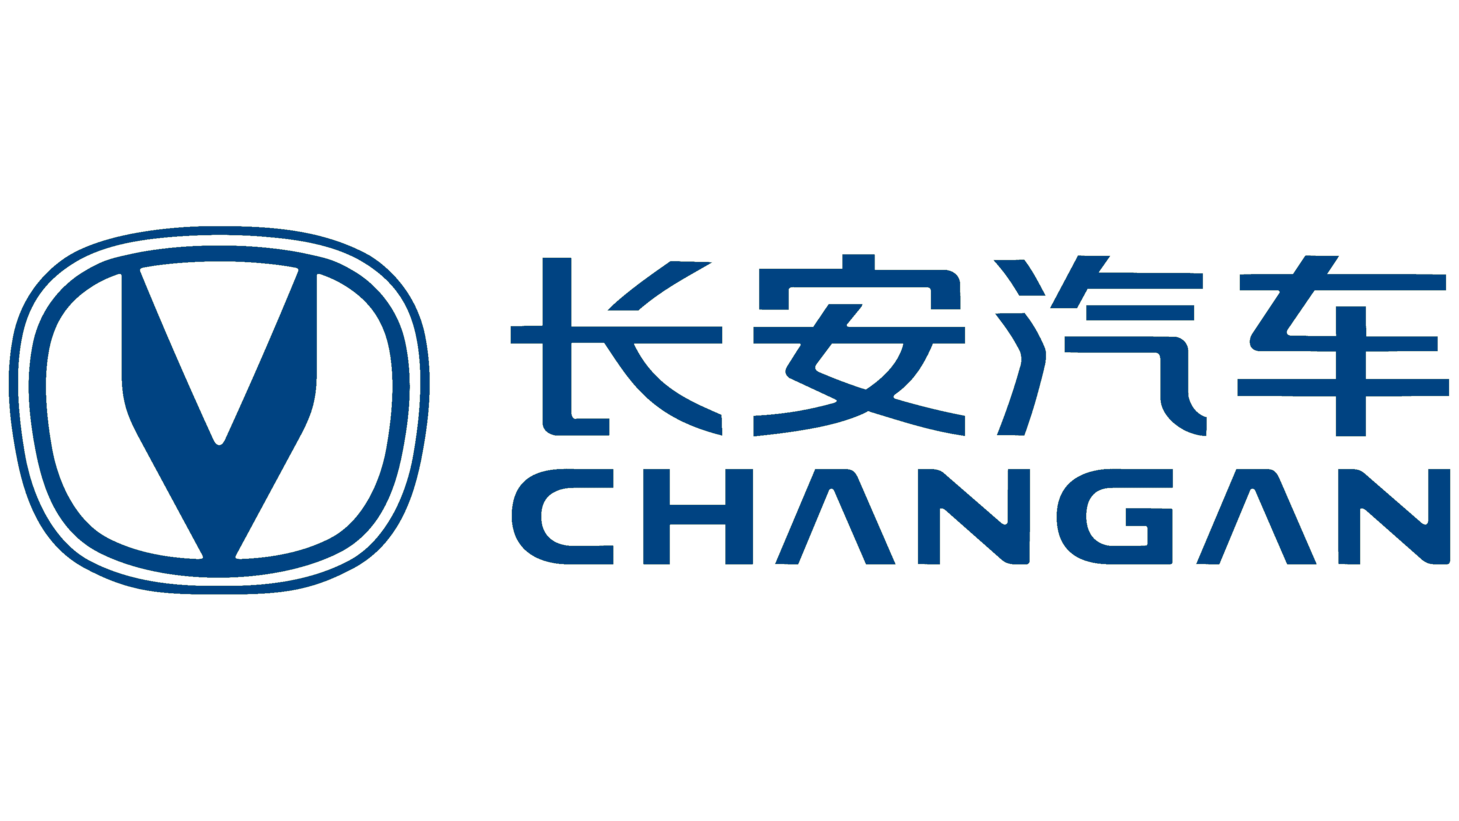 Changan sign 2020 present